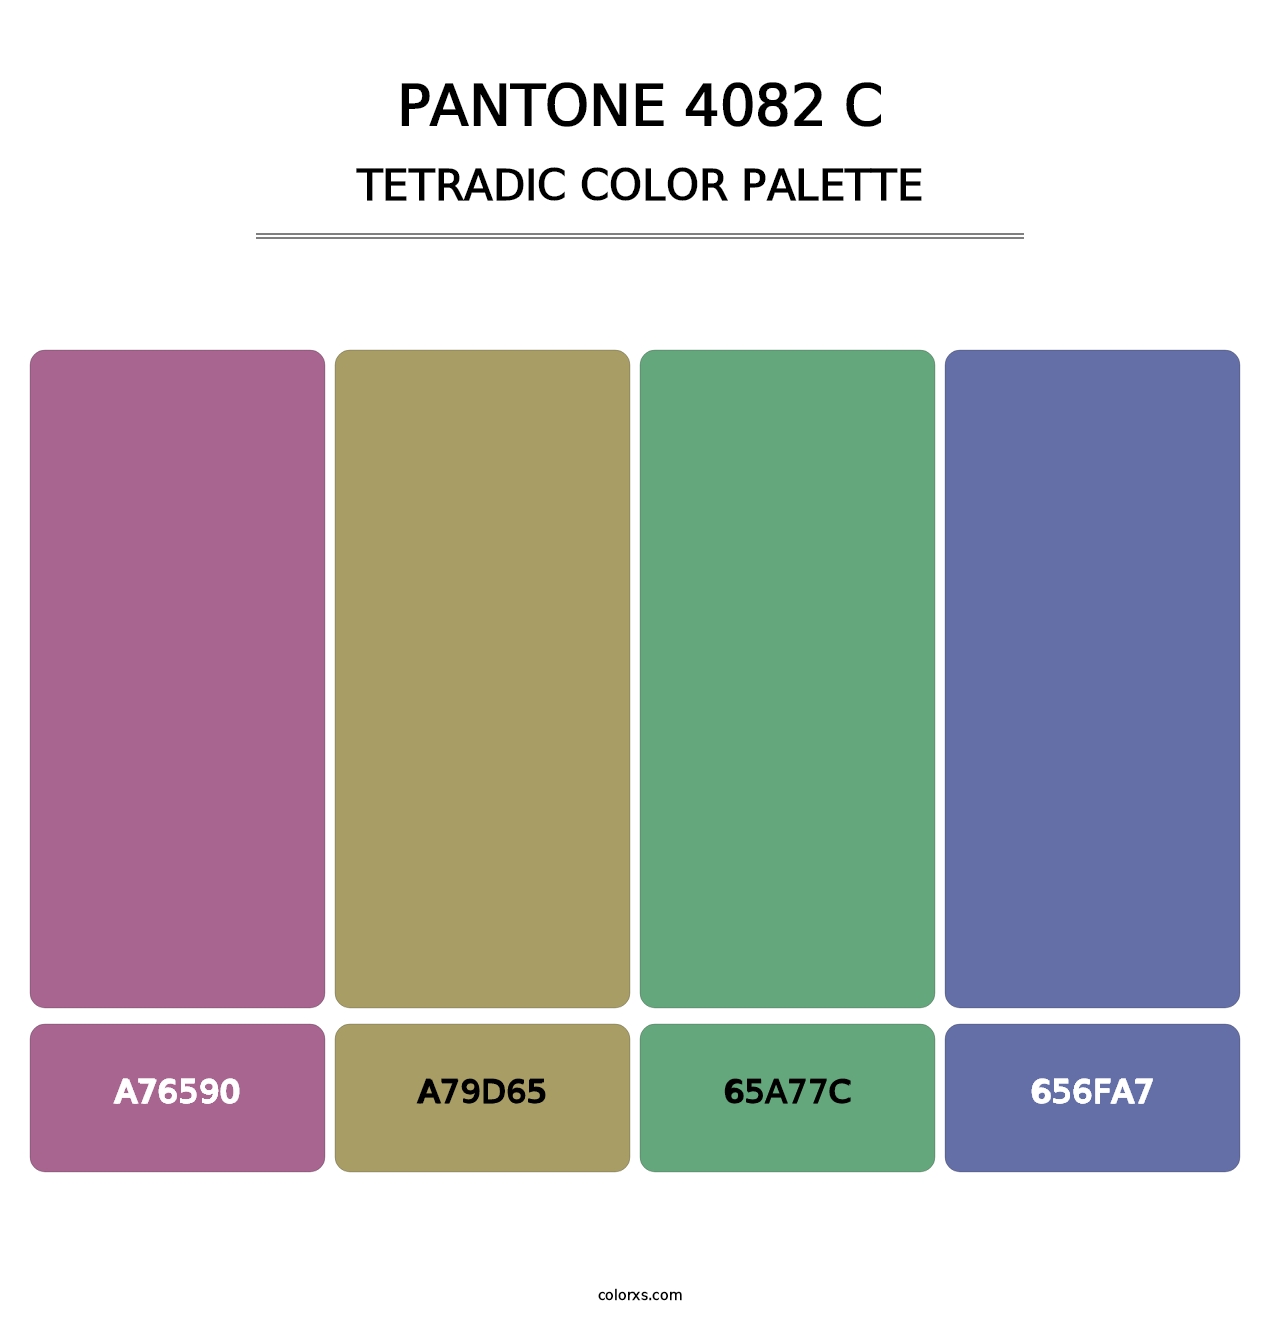 PANTONE 4082 C - Tetradic Color Palette